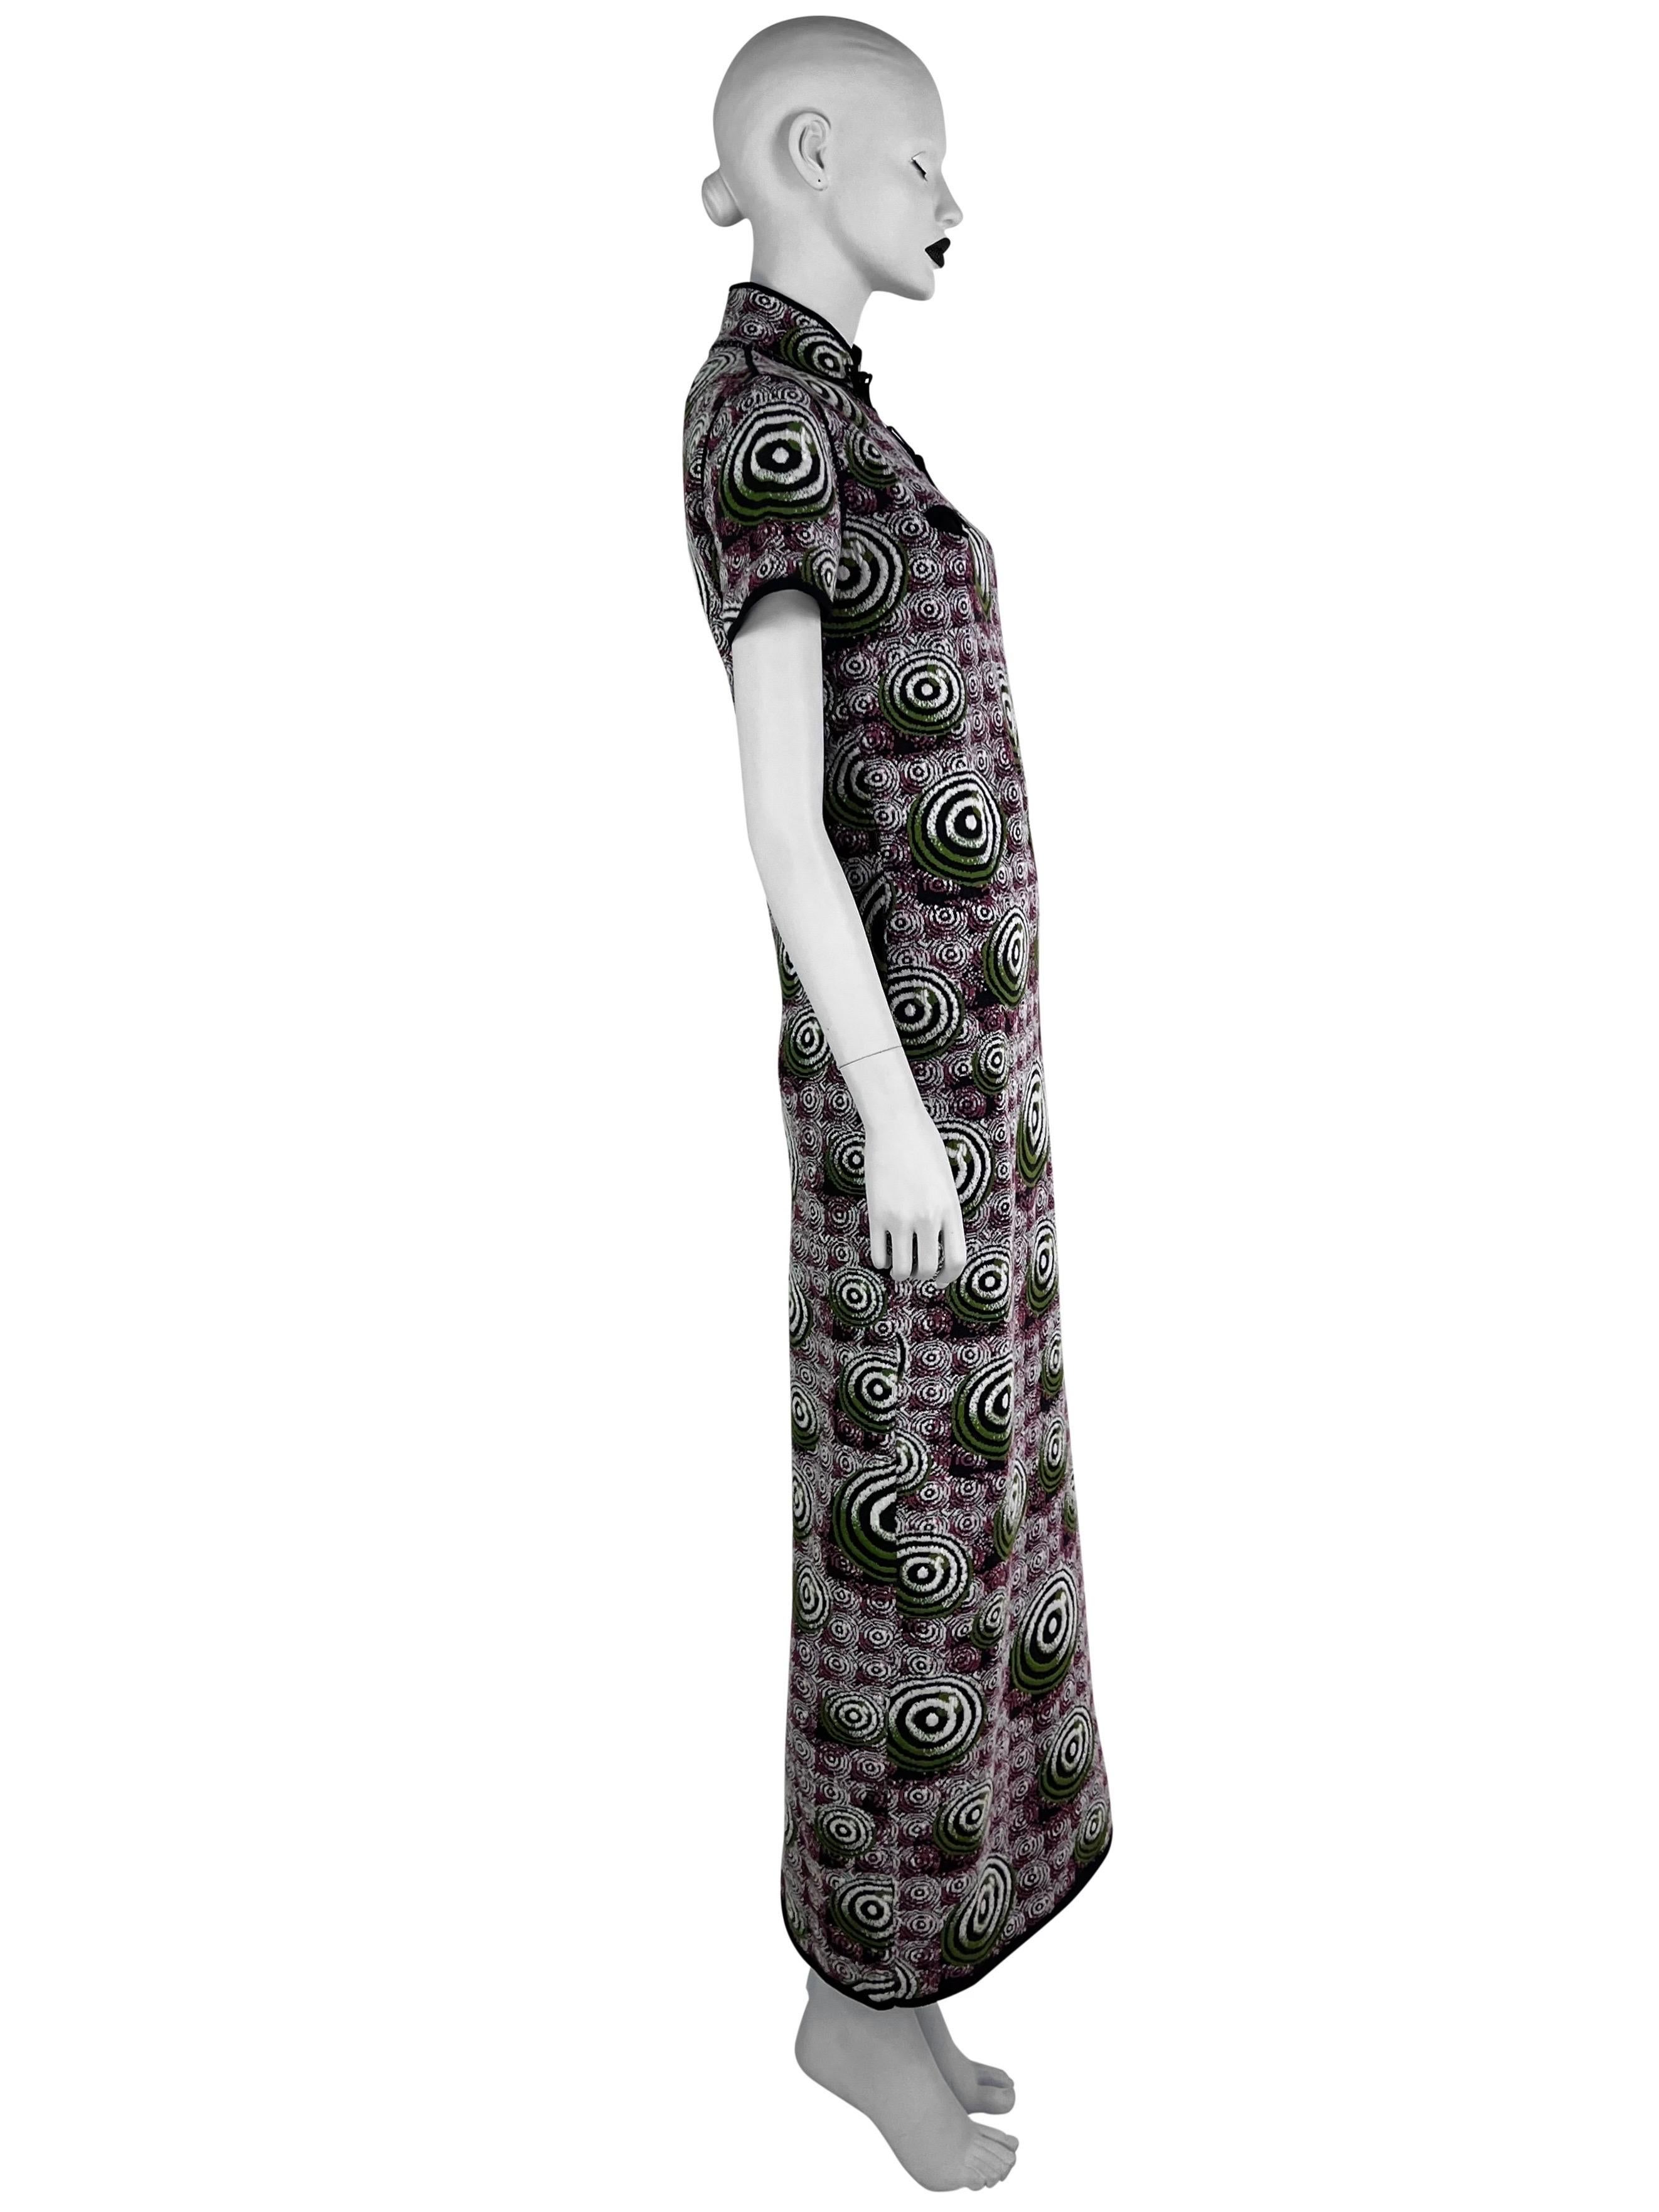 Jean-Paul Gaultier Fall 1996 Psychedelic Print Jacquard Cheongsam Dress For Sale 8